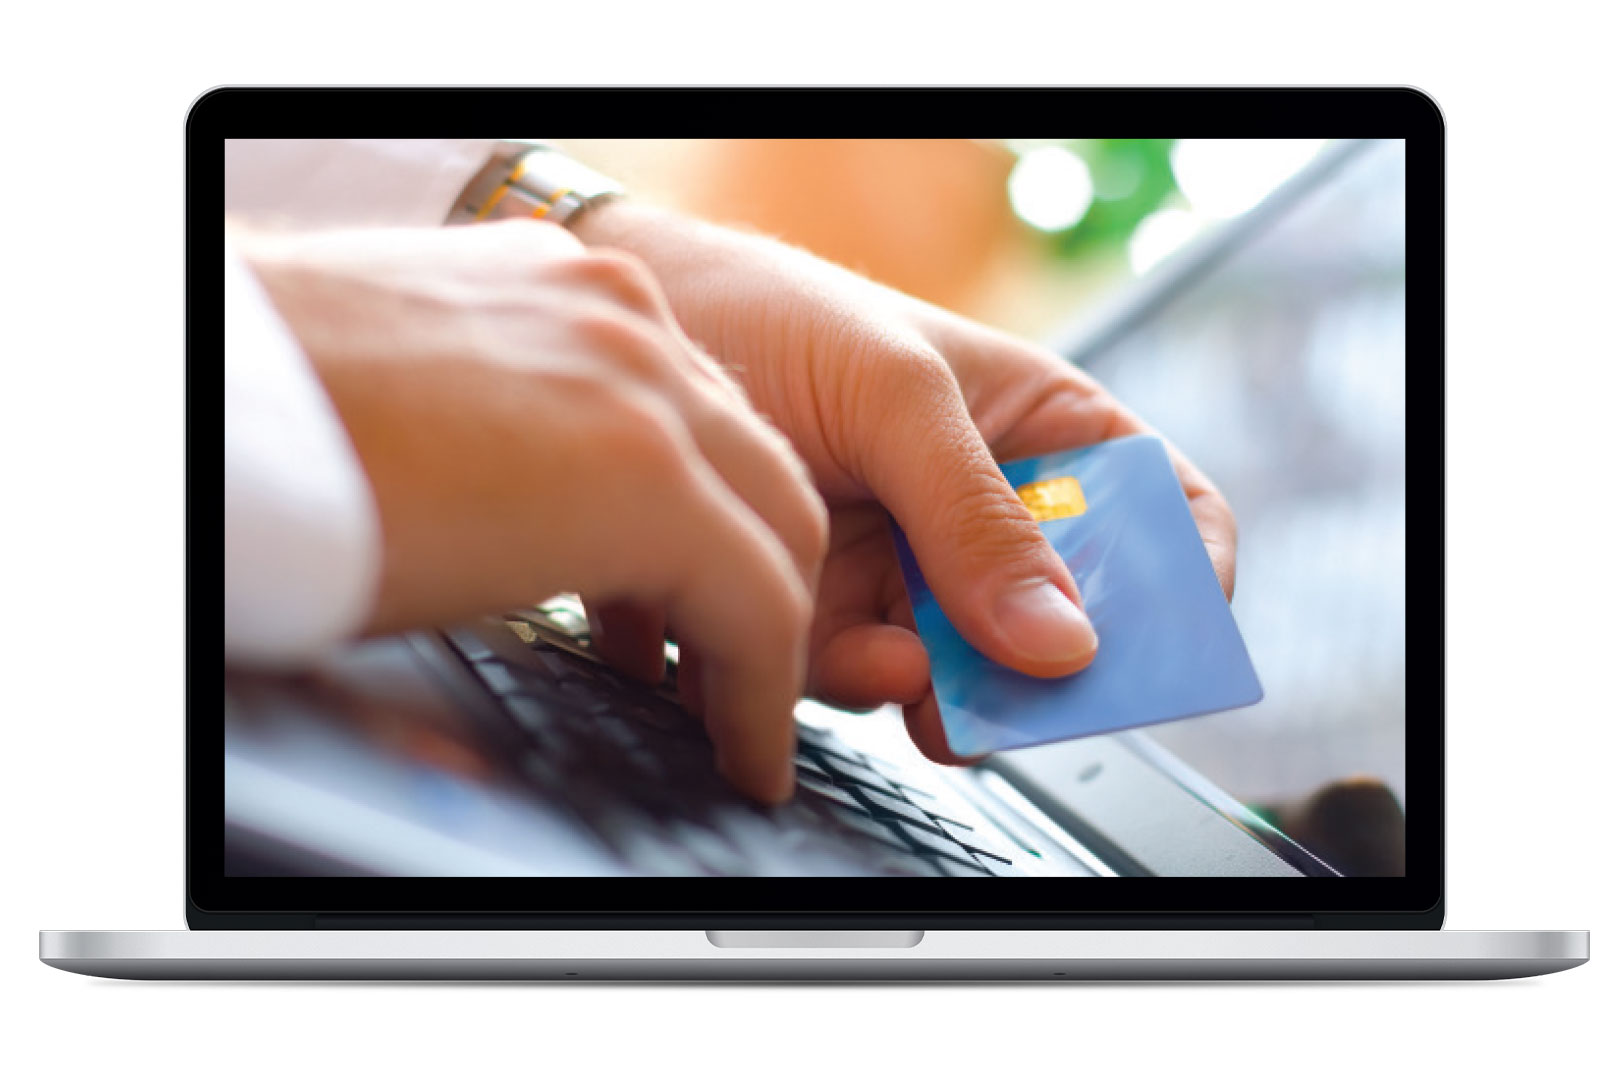 Image of hands entering a credit card online